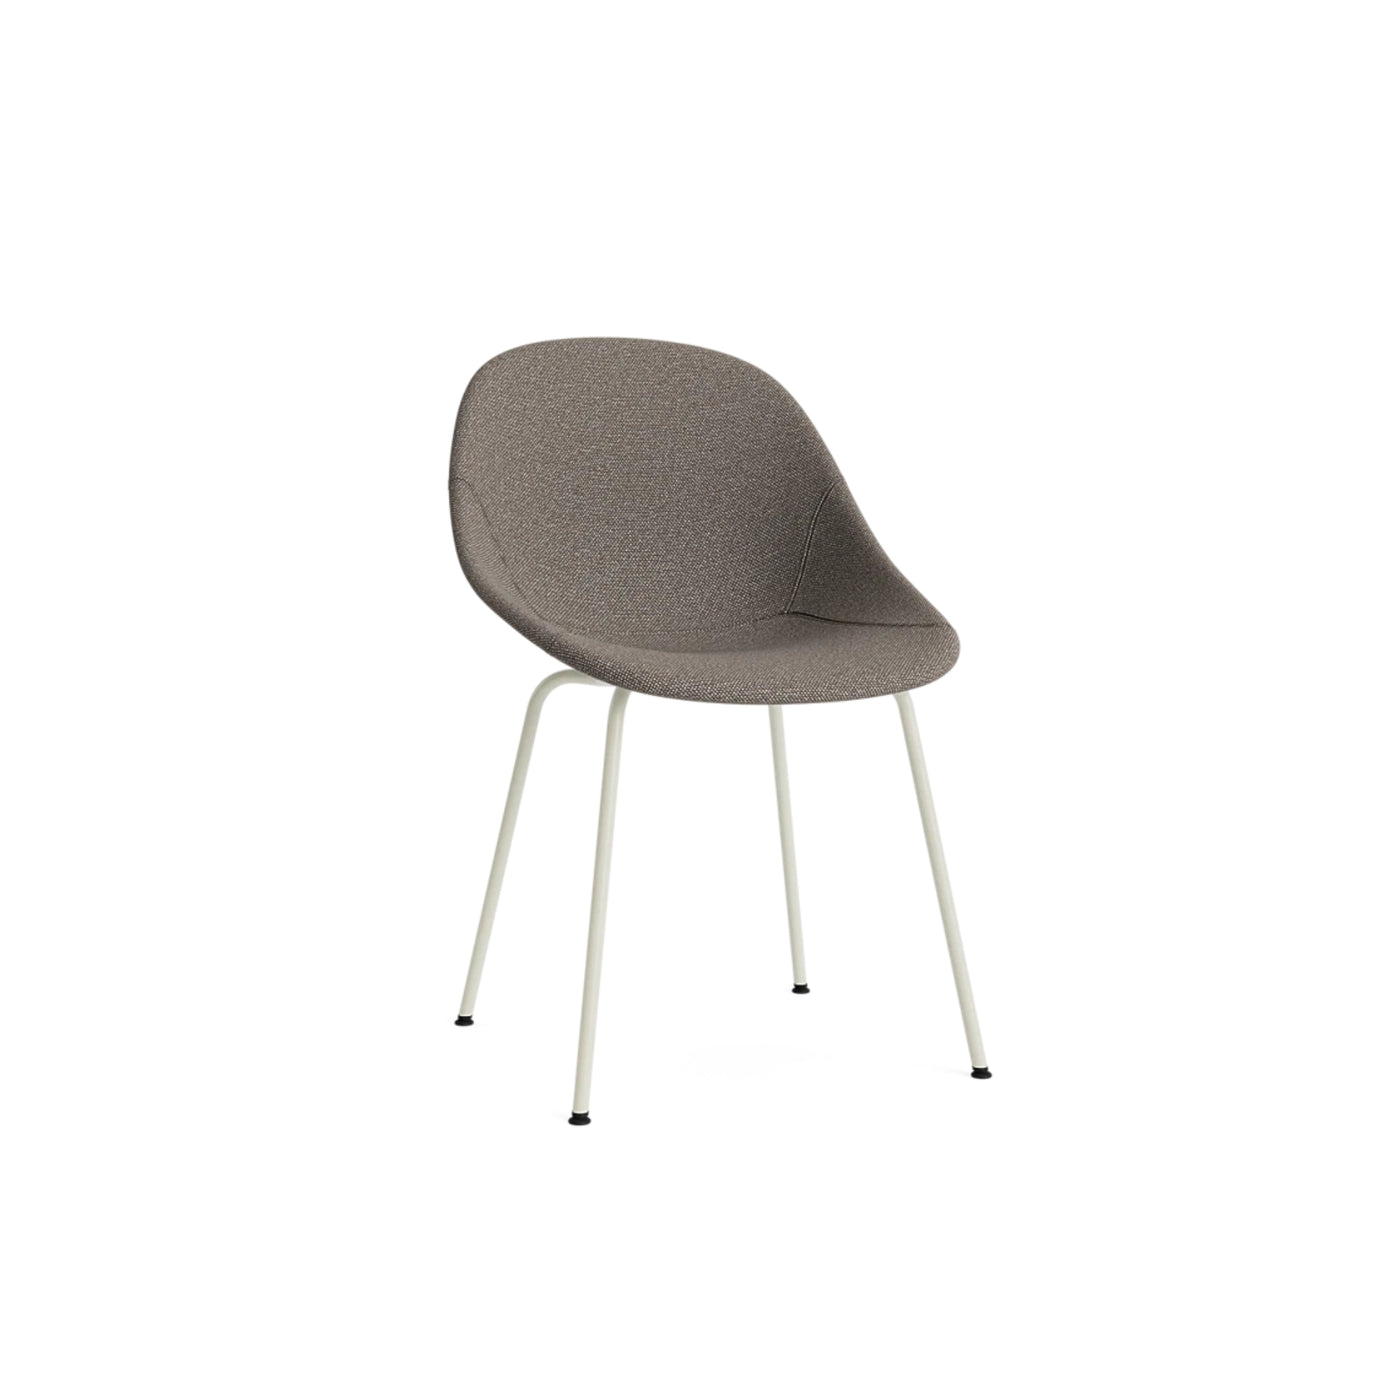 Normann Copenhagen Mat Chair at someday designs. #colour_hallingdal-270